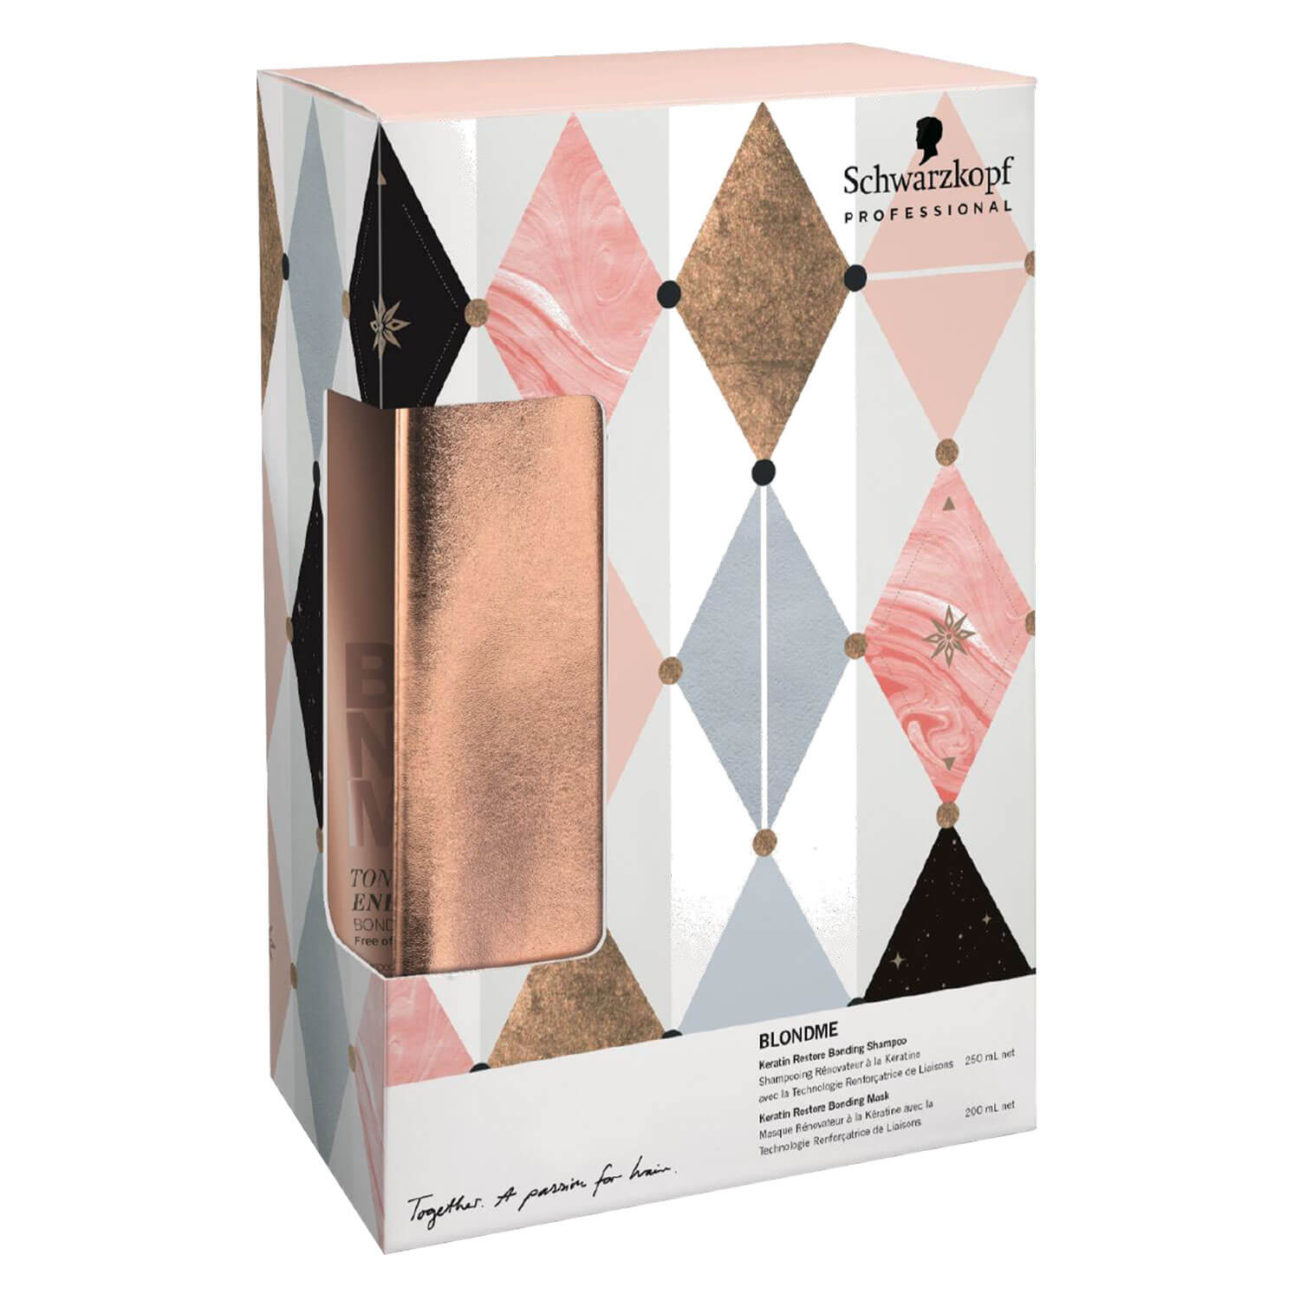 Schwarzkopf Professional BlondMe Gift Set including Keratine Restore Bonding Shampoo and Keratine Restore Bonding Conditioner + Free Bag